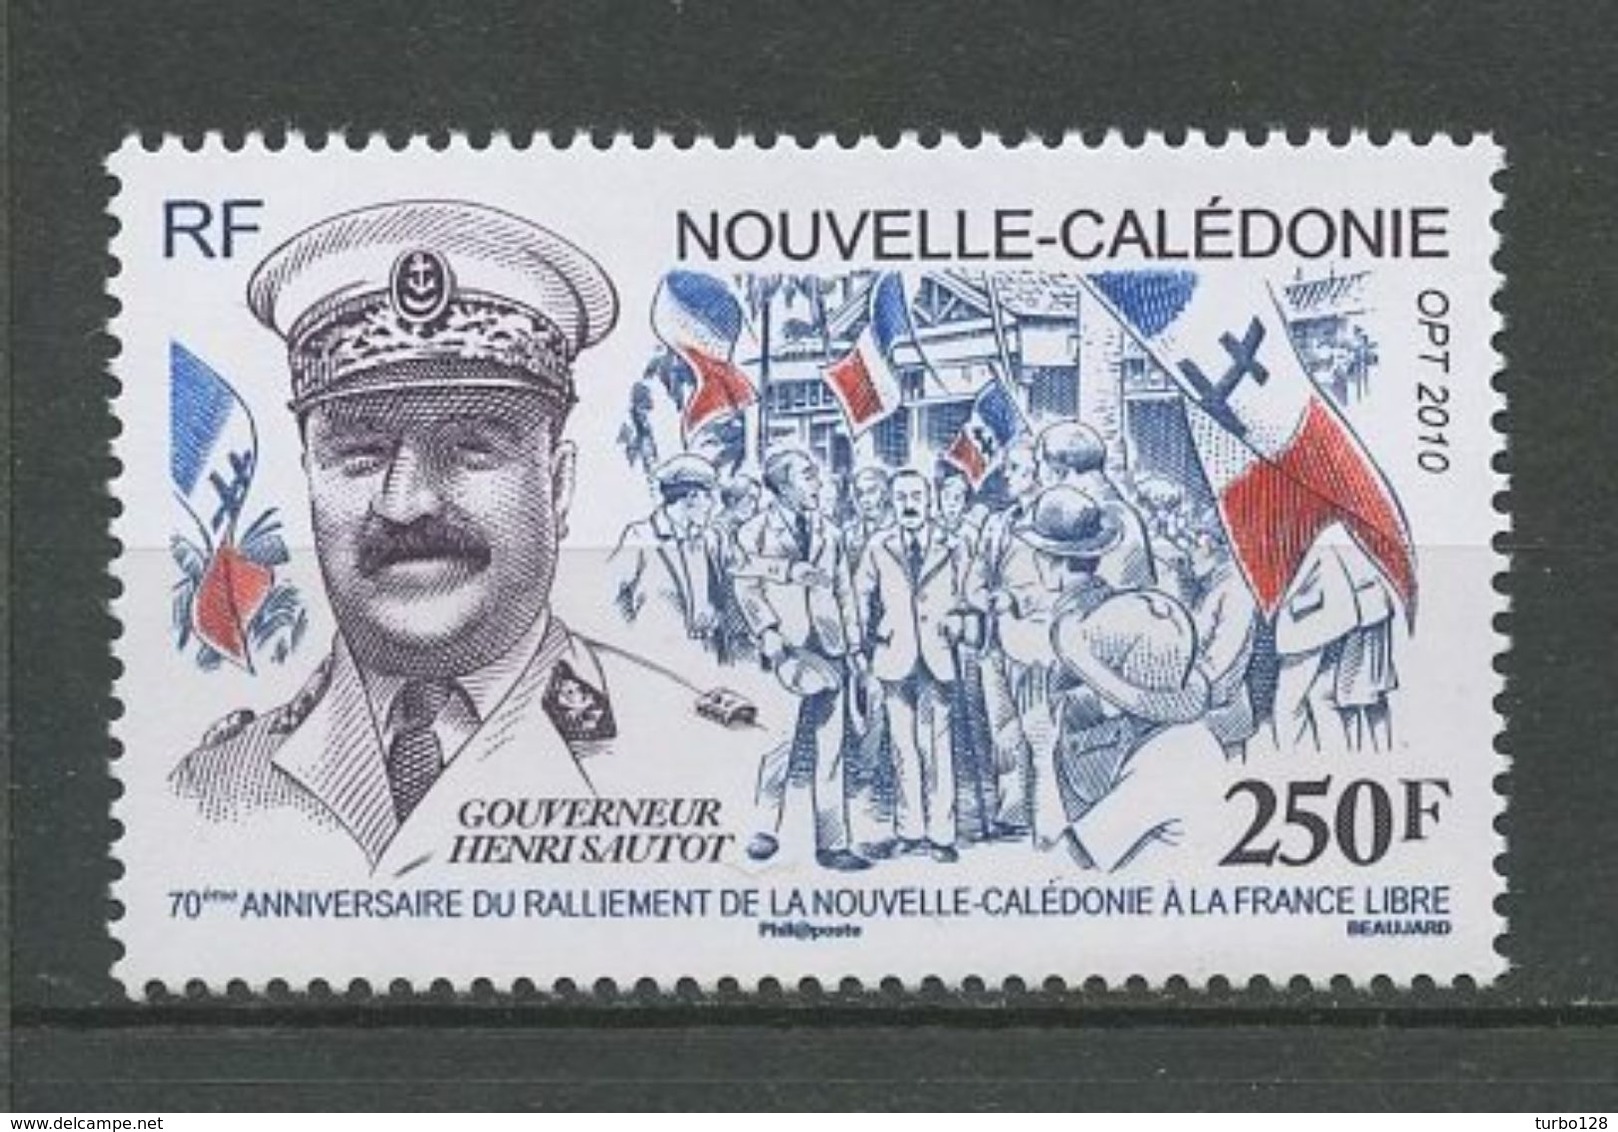 Nlle Calédonie  2010  N° 1112 **  Neuf MNH  Superbe Henri Sautot Drapeaux Flags - Neufs